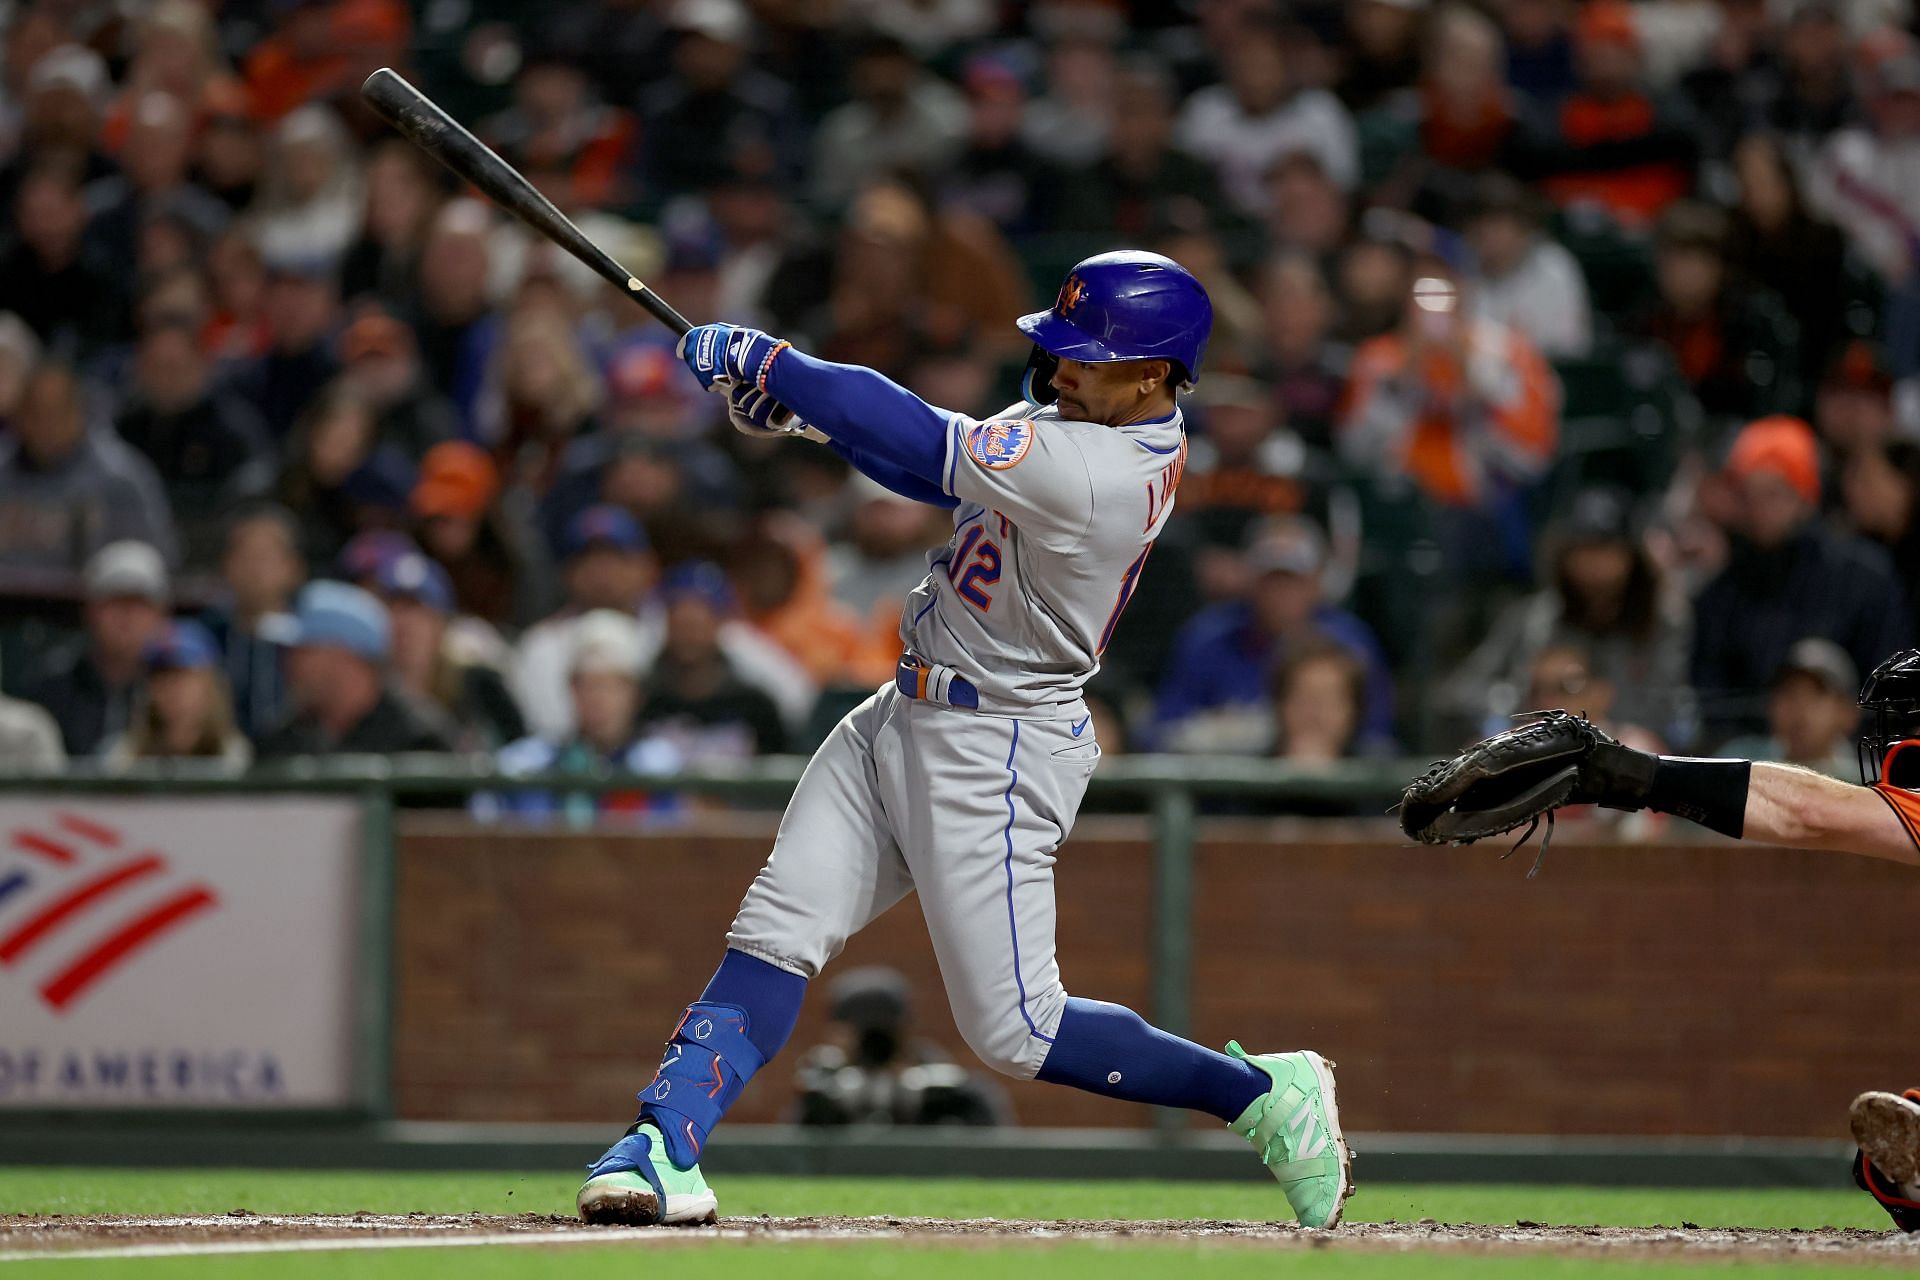 MLB radio host calls out Francisco Lindor as Mets shortstop